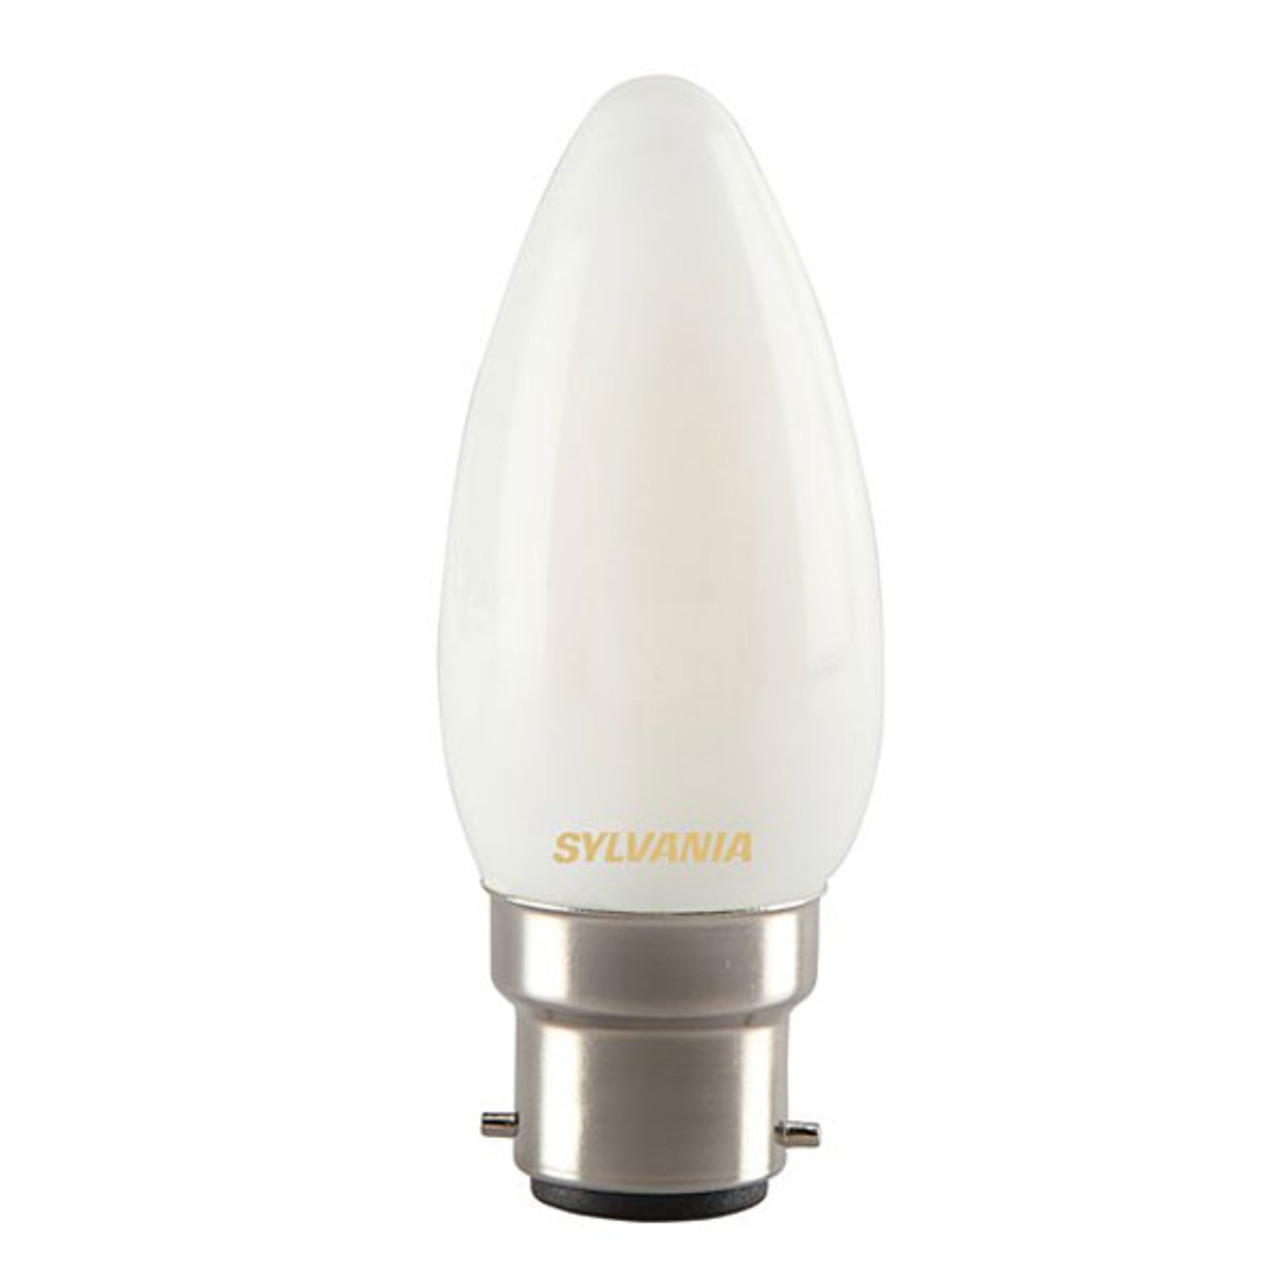 Sylvania Retro LED Candle 4W BC Pearl Very Warm White